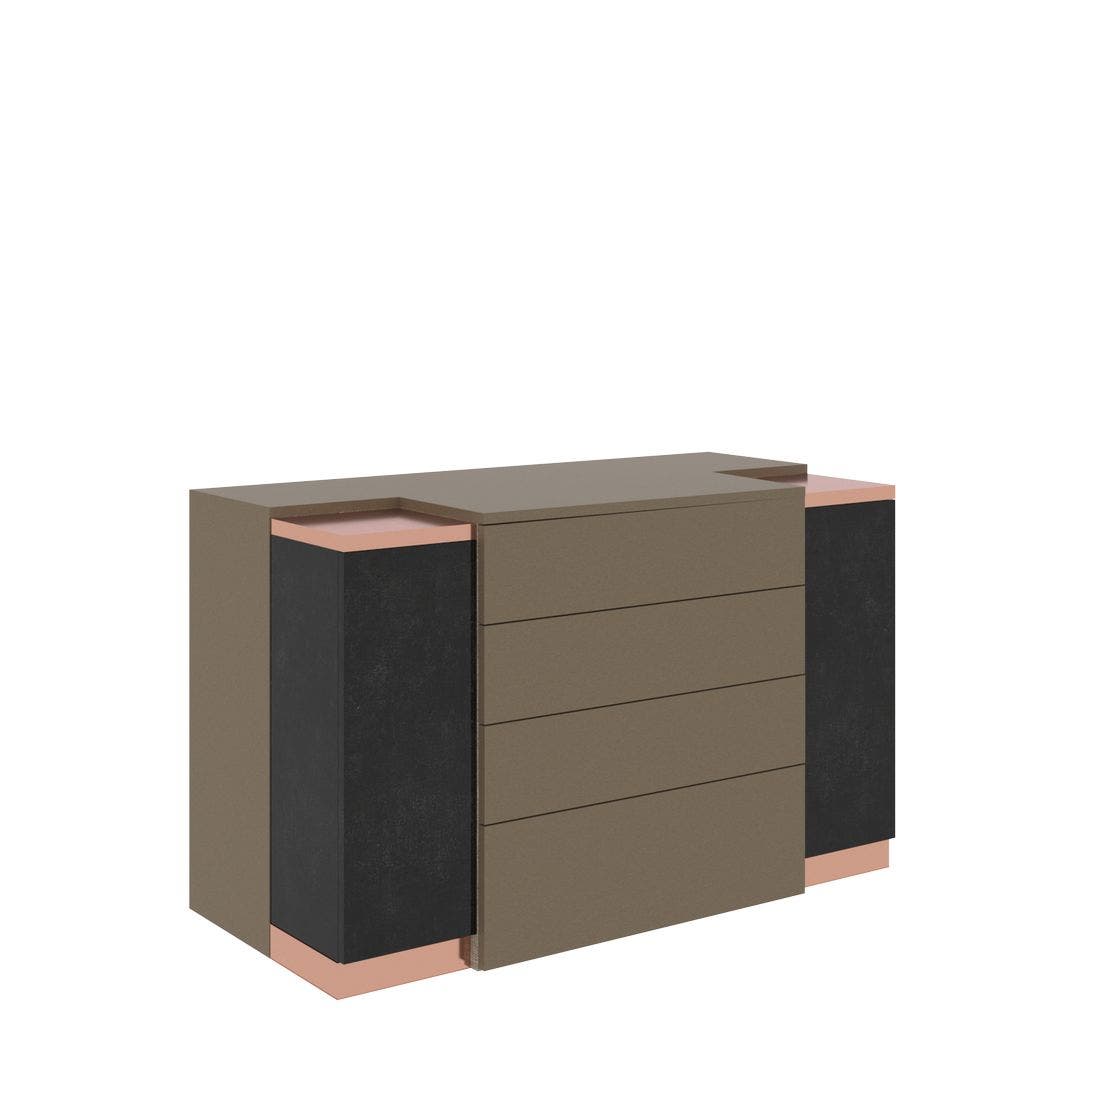 19155359-matilda-furniture-storage-organization-storage-furniture-01